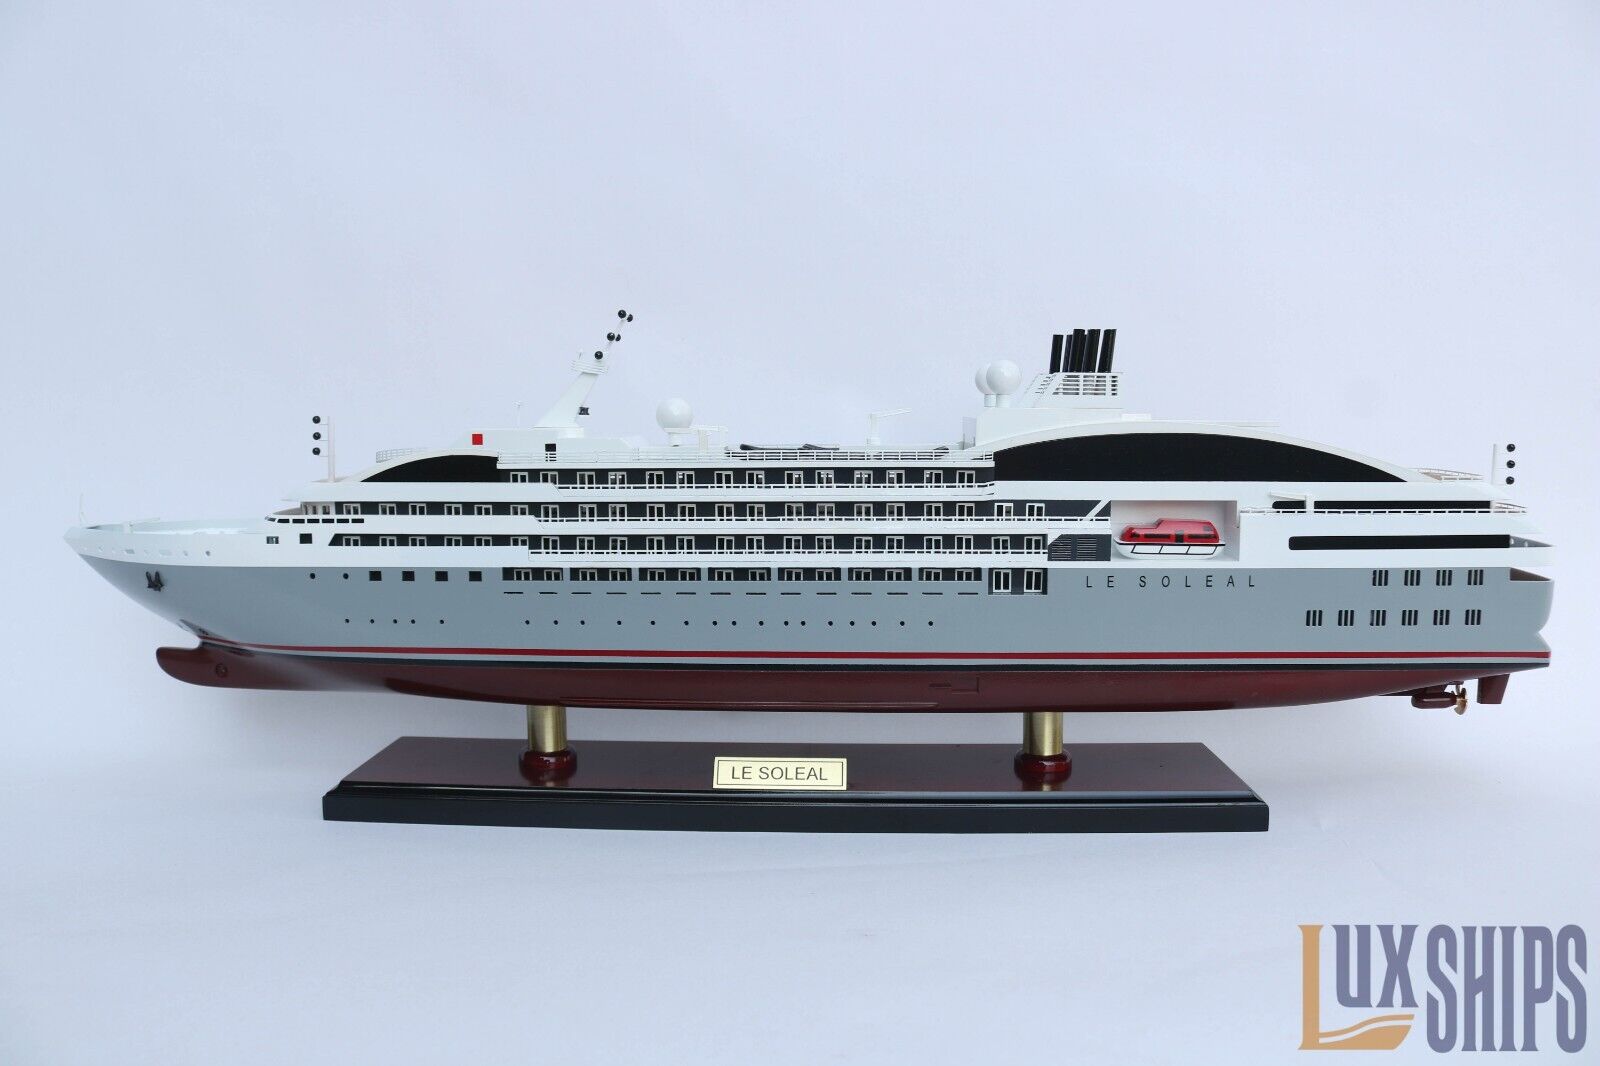 Le Soleal Model Ship - Le Soleal Ship Model